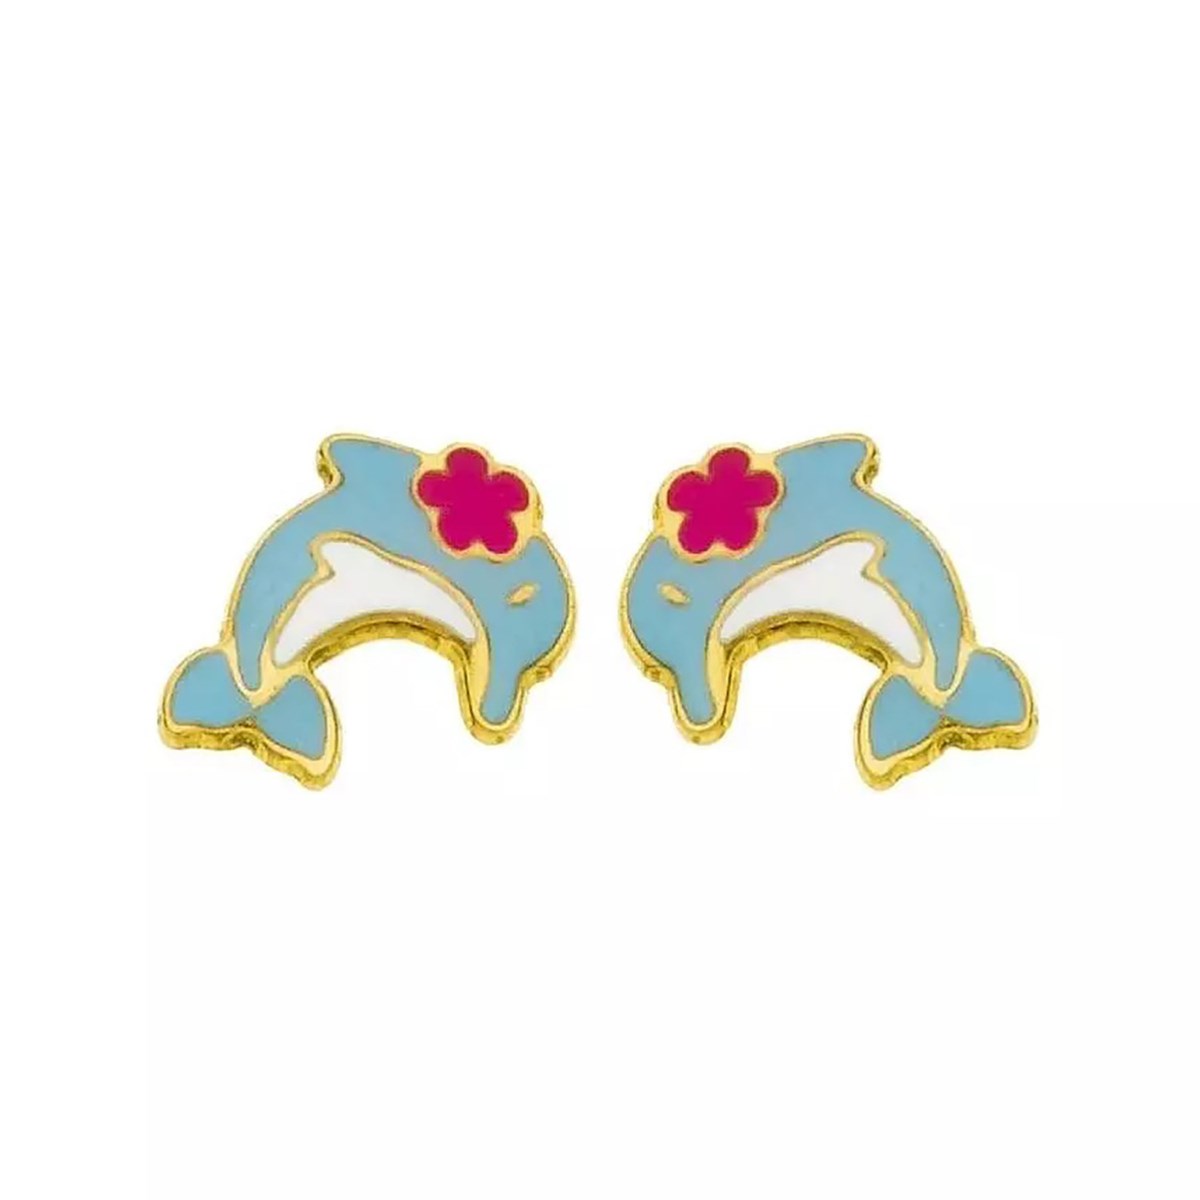 Boucles d'oreilles petit dauphin fleur rose
or jaune 18 carats